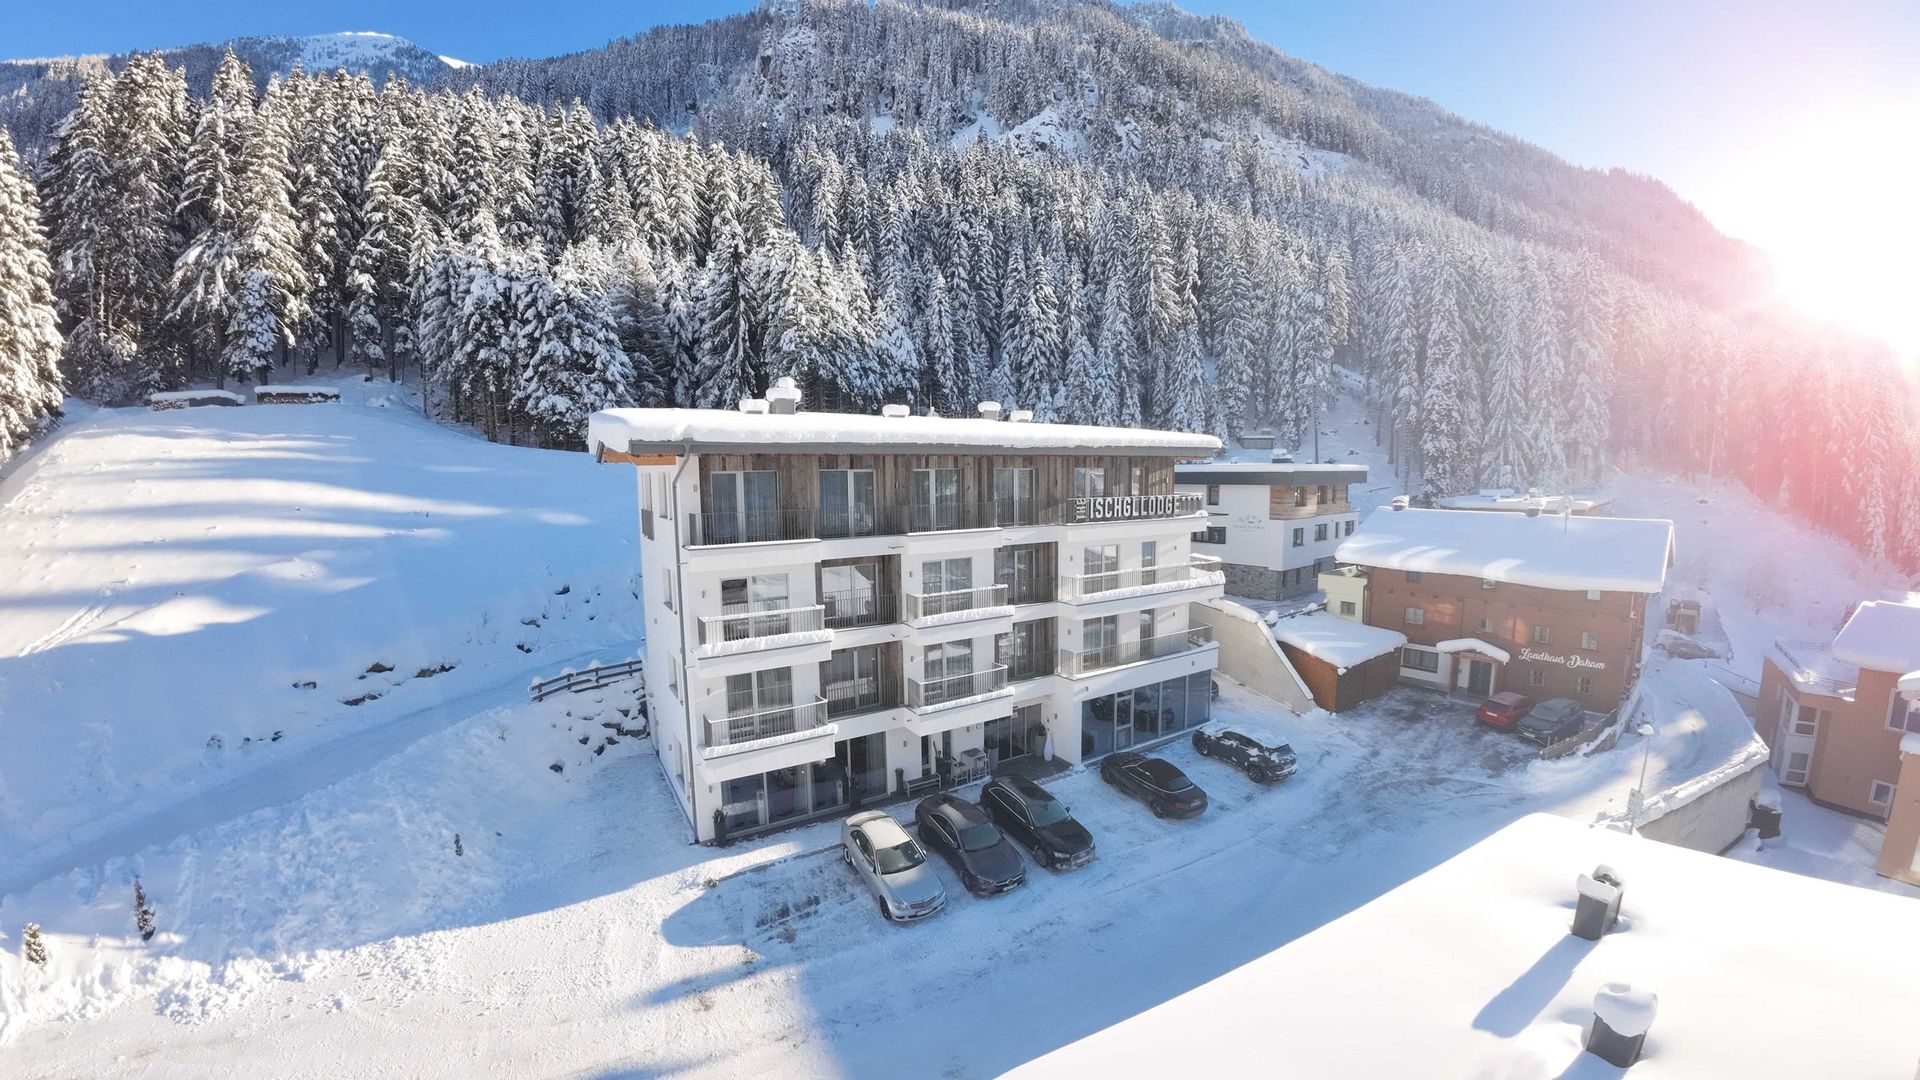 The Ischgl Lodge - St Anton am Arlberg